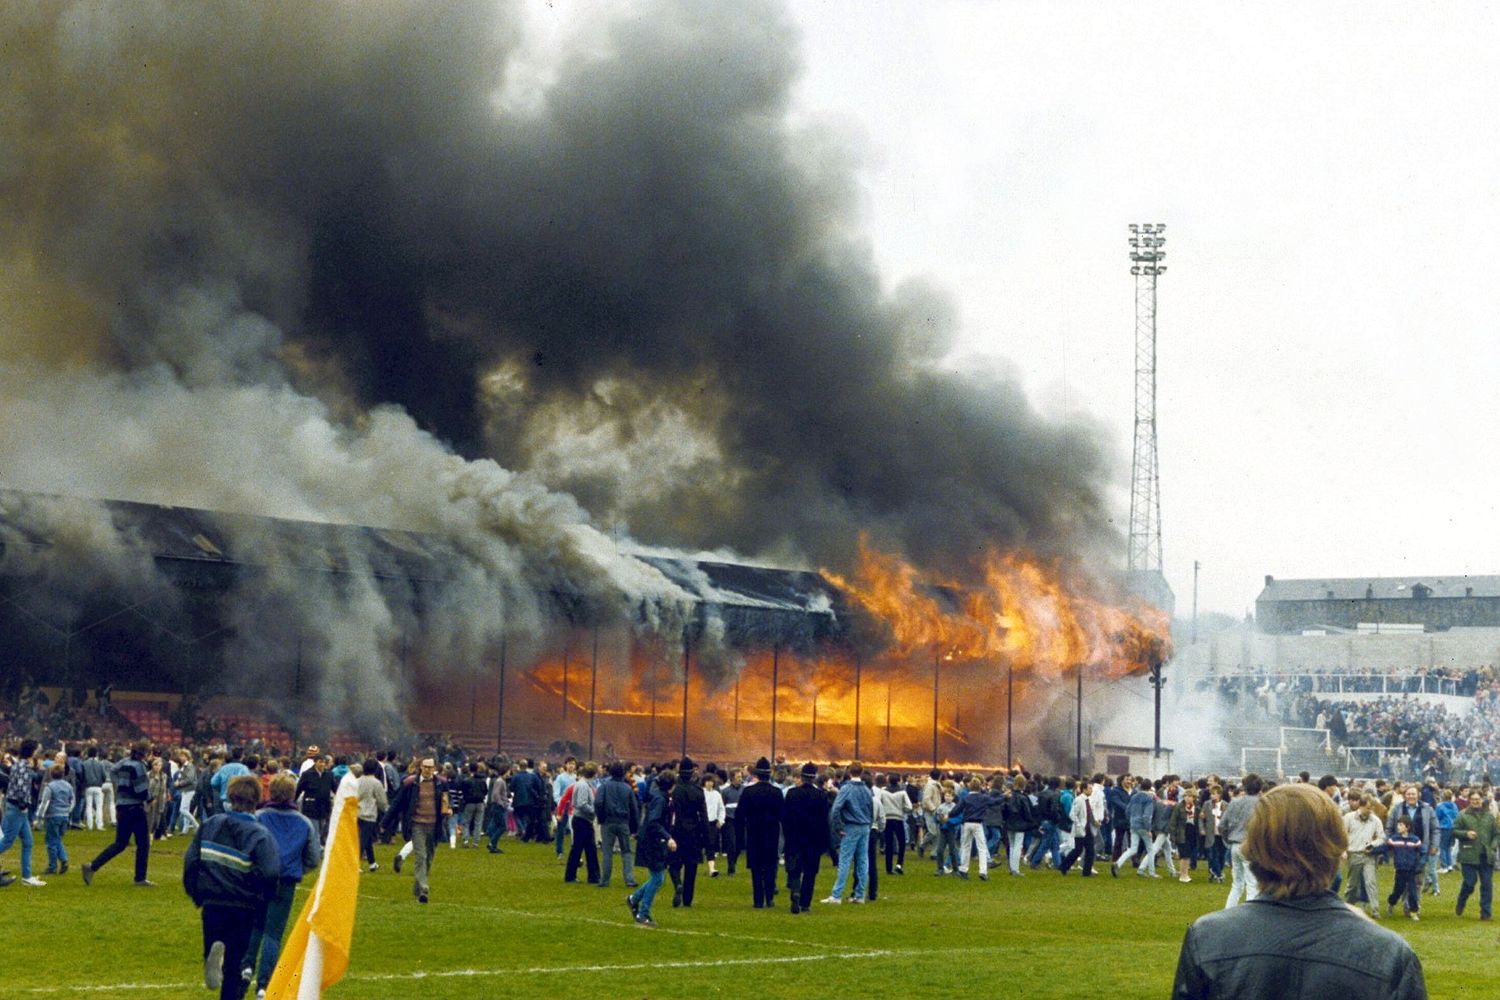 Bradford City стадион пожар. Брэдфорд Сити 1985. Пожар на футбольном стадионе 1985 Брэдфорд. Пожар на стадионе в Англии в 1985 году. Огни стадиона